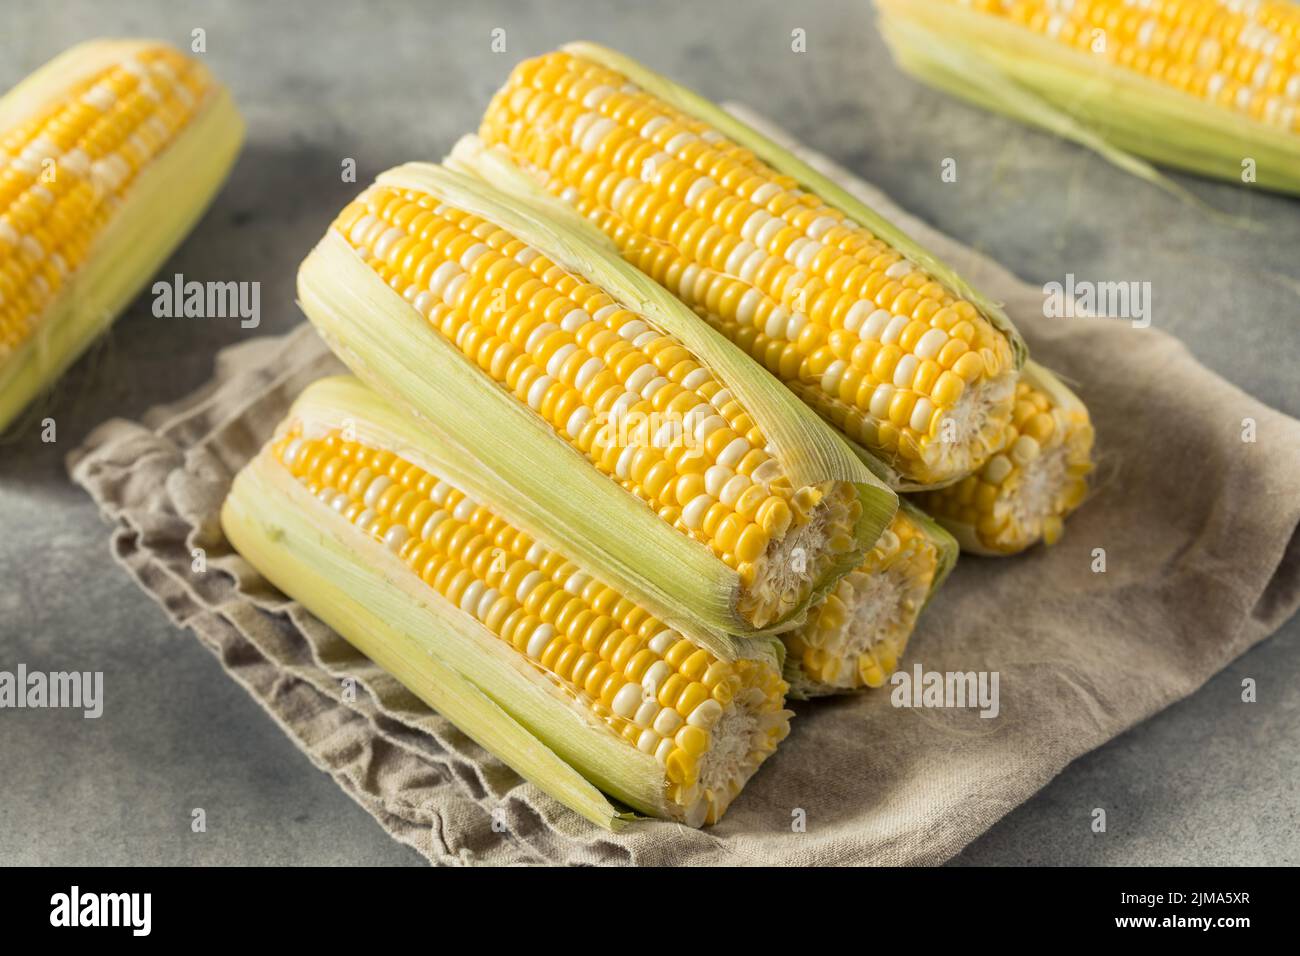 Raw Organic Yellow Sweet Corn on the Cob Ready to Cook Stock Photo